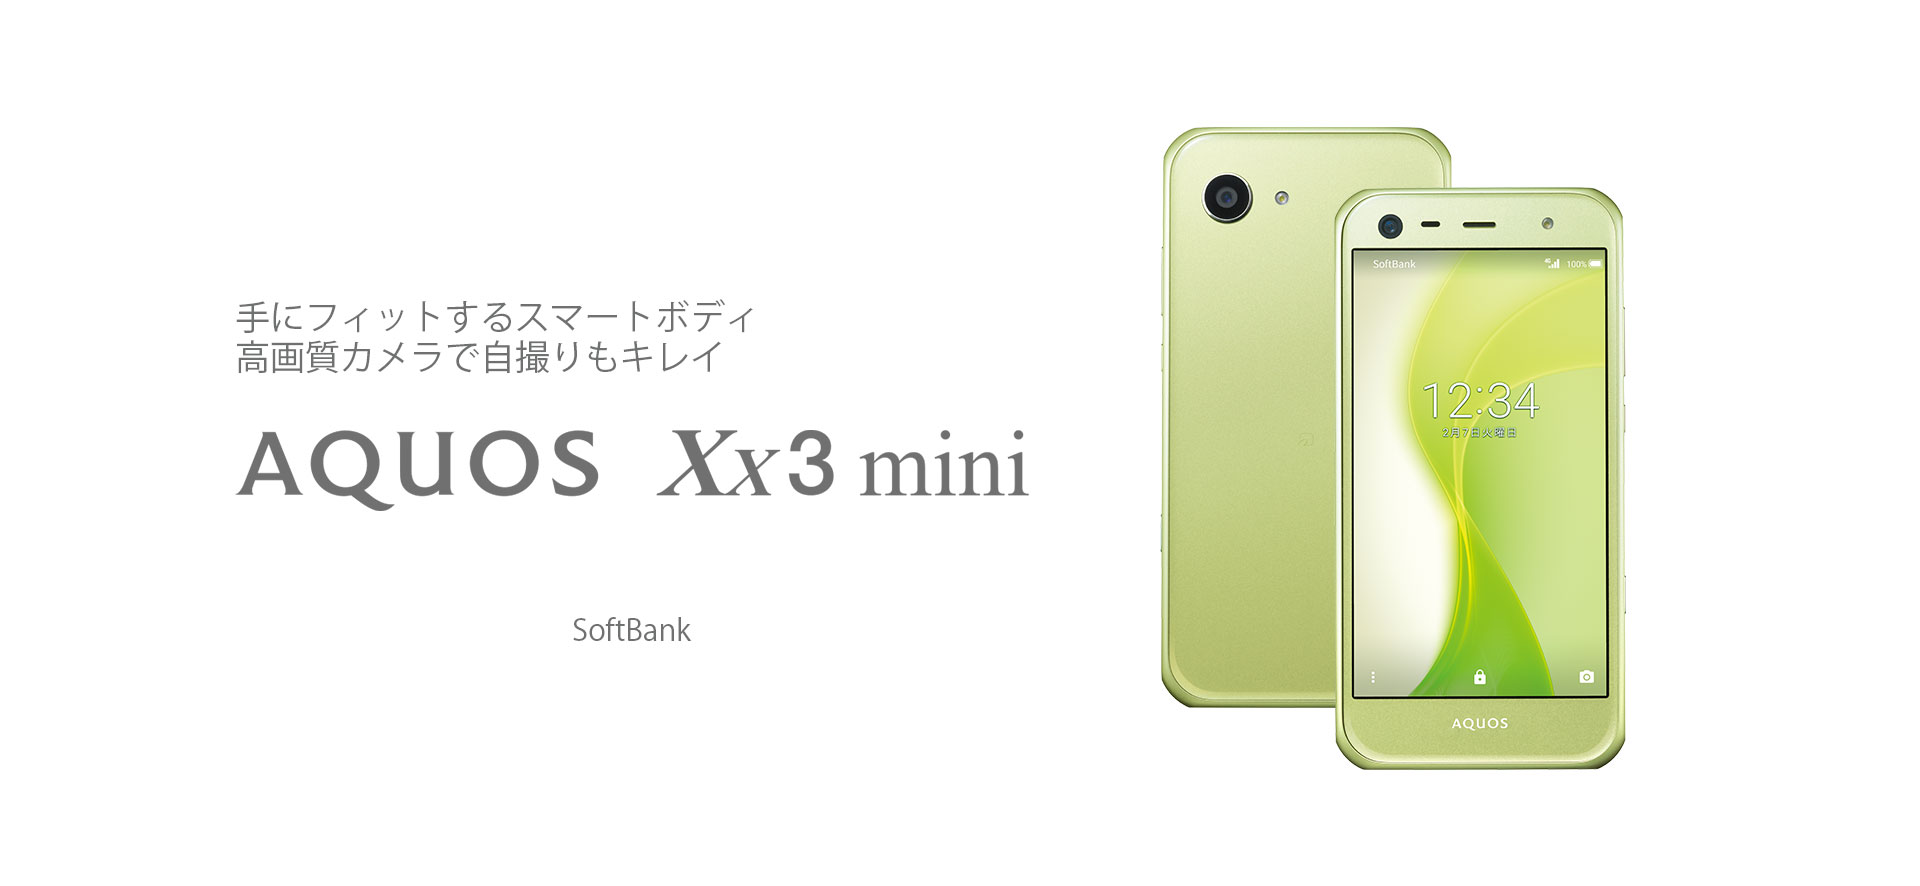 Sharp Aquos Xx3 mini ra mắt: 4,7 inch Full HD, Snapdragon 617